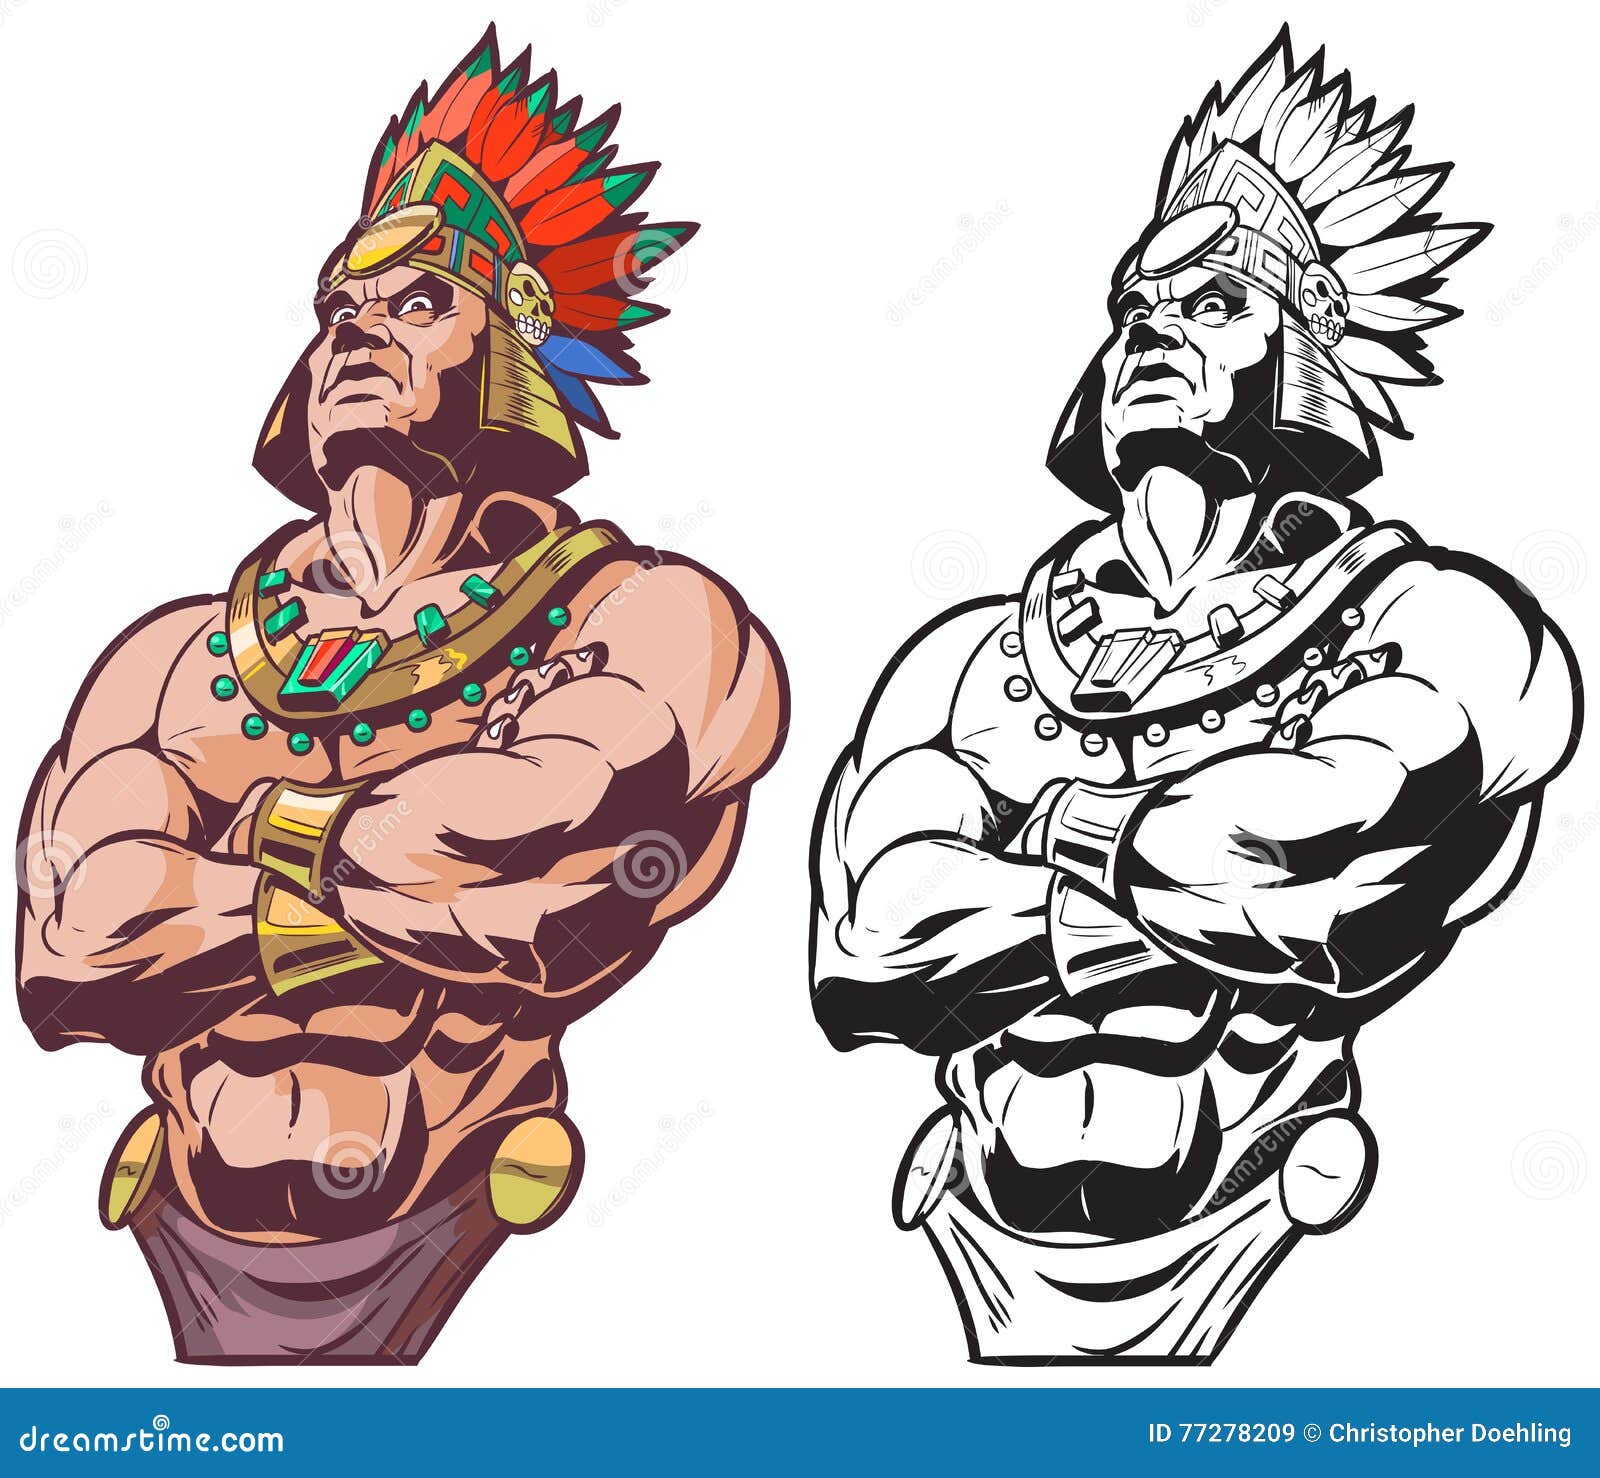 inca or mayan or aztec warrior or chief  mascot